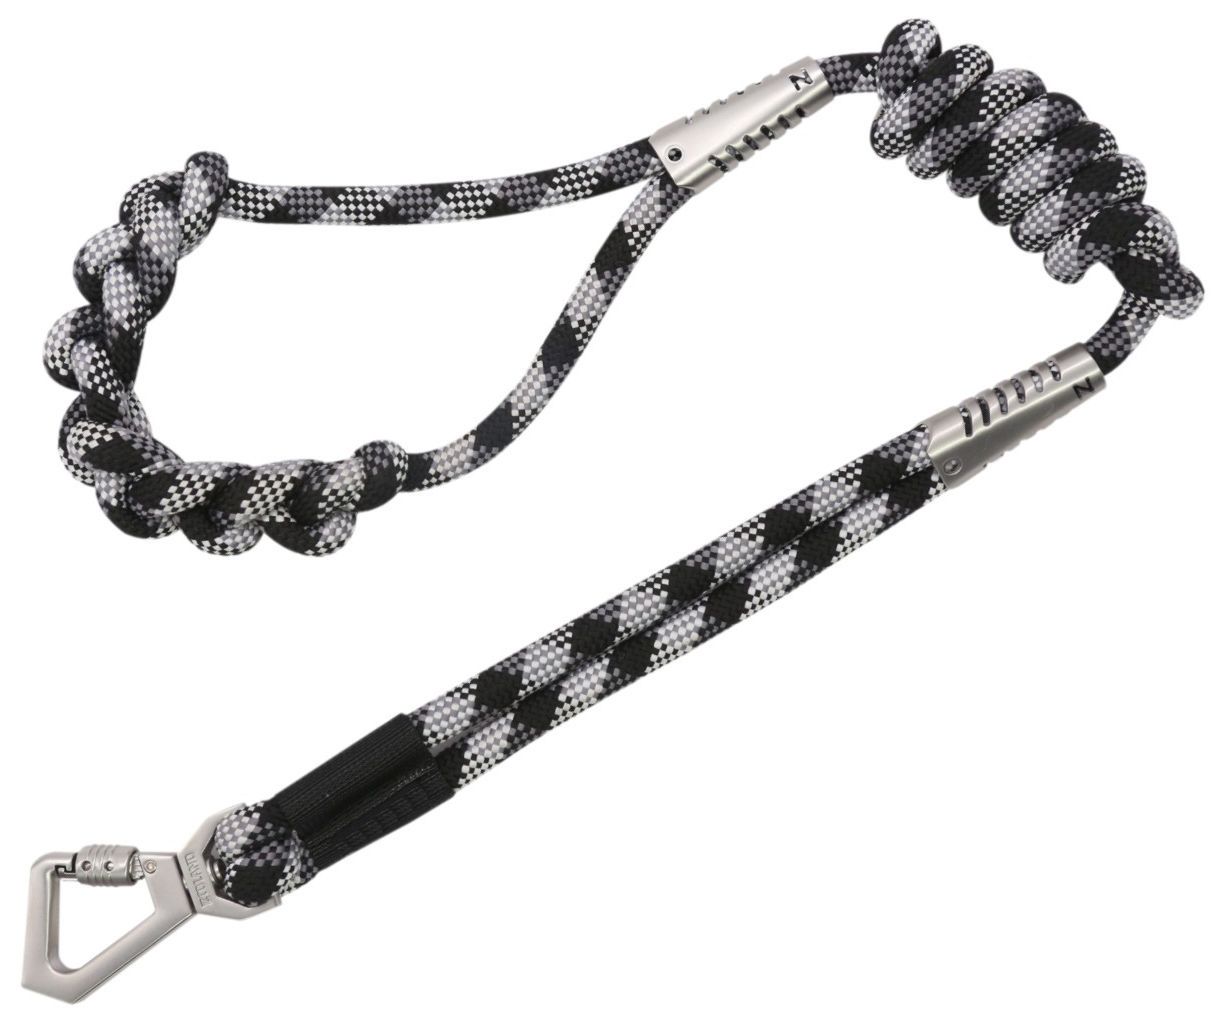 Pet Life ® 'Neo-Craft' Handmade One-Piece Knot-Gripped Training Dog Leash Black 